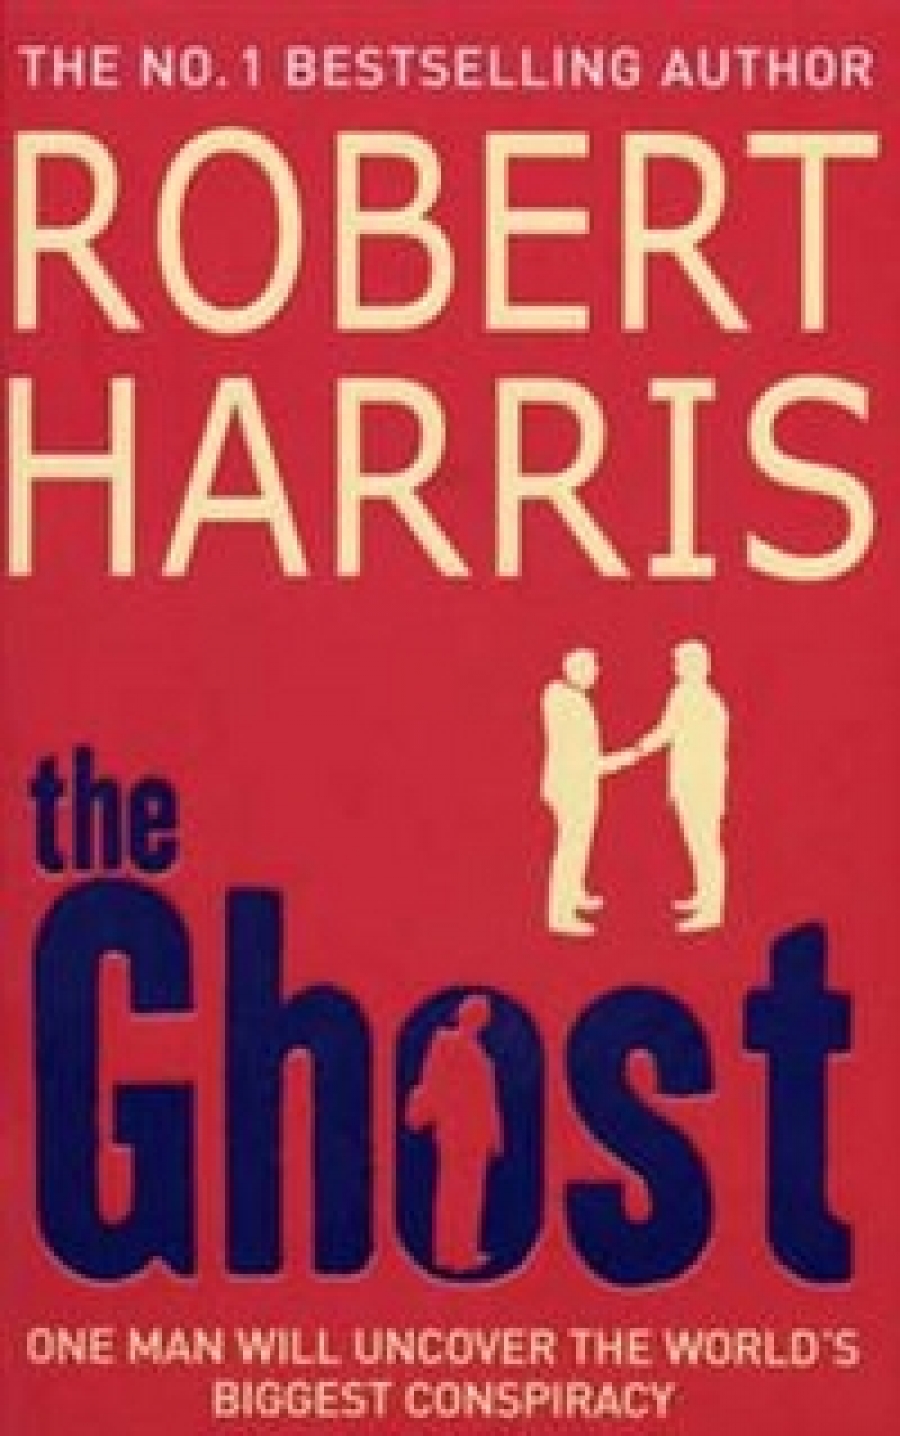 Robert H. Ghost (Ghost Writer) 